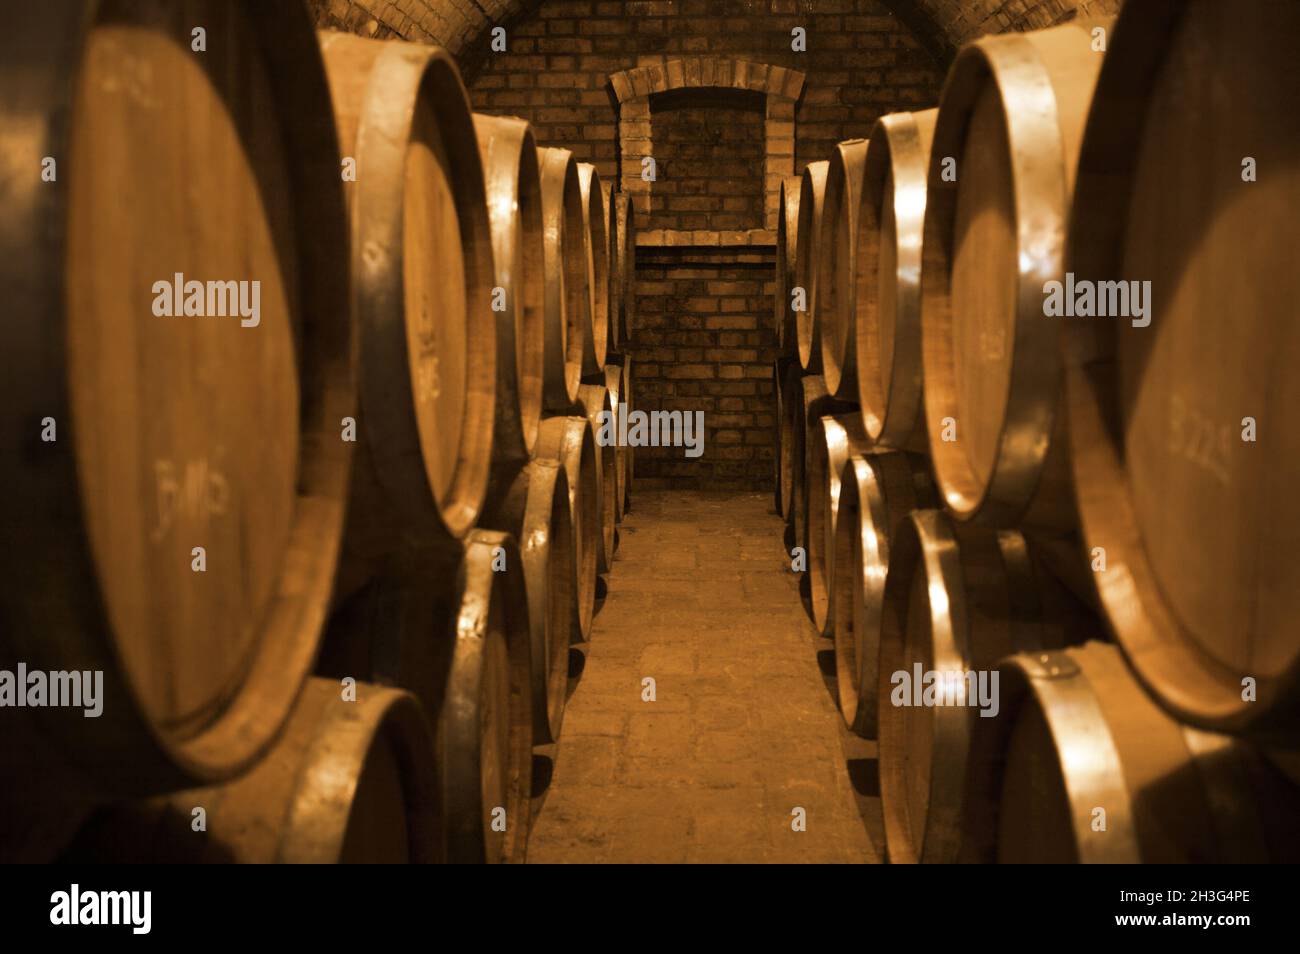 Winecellar Stock Photo